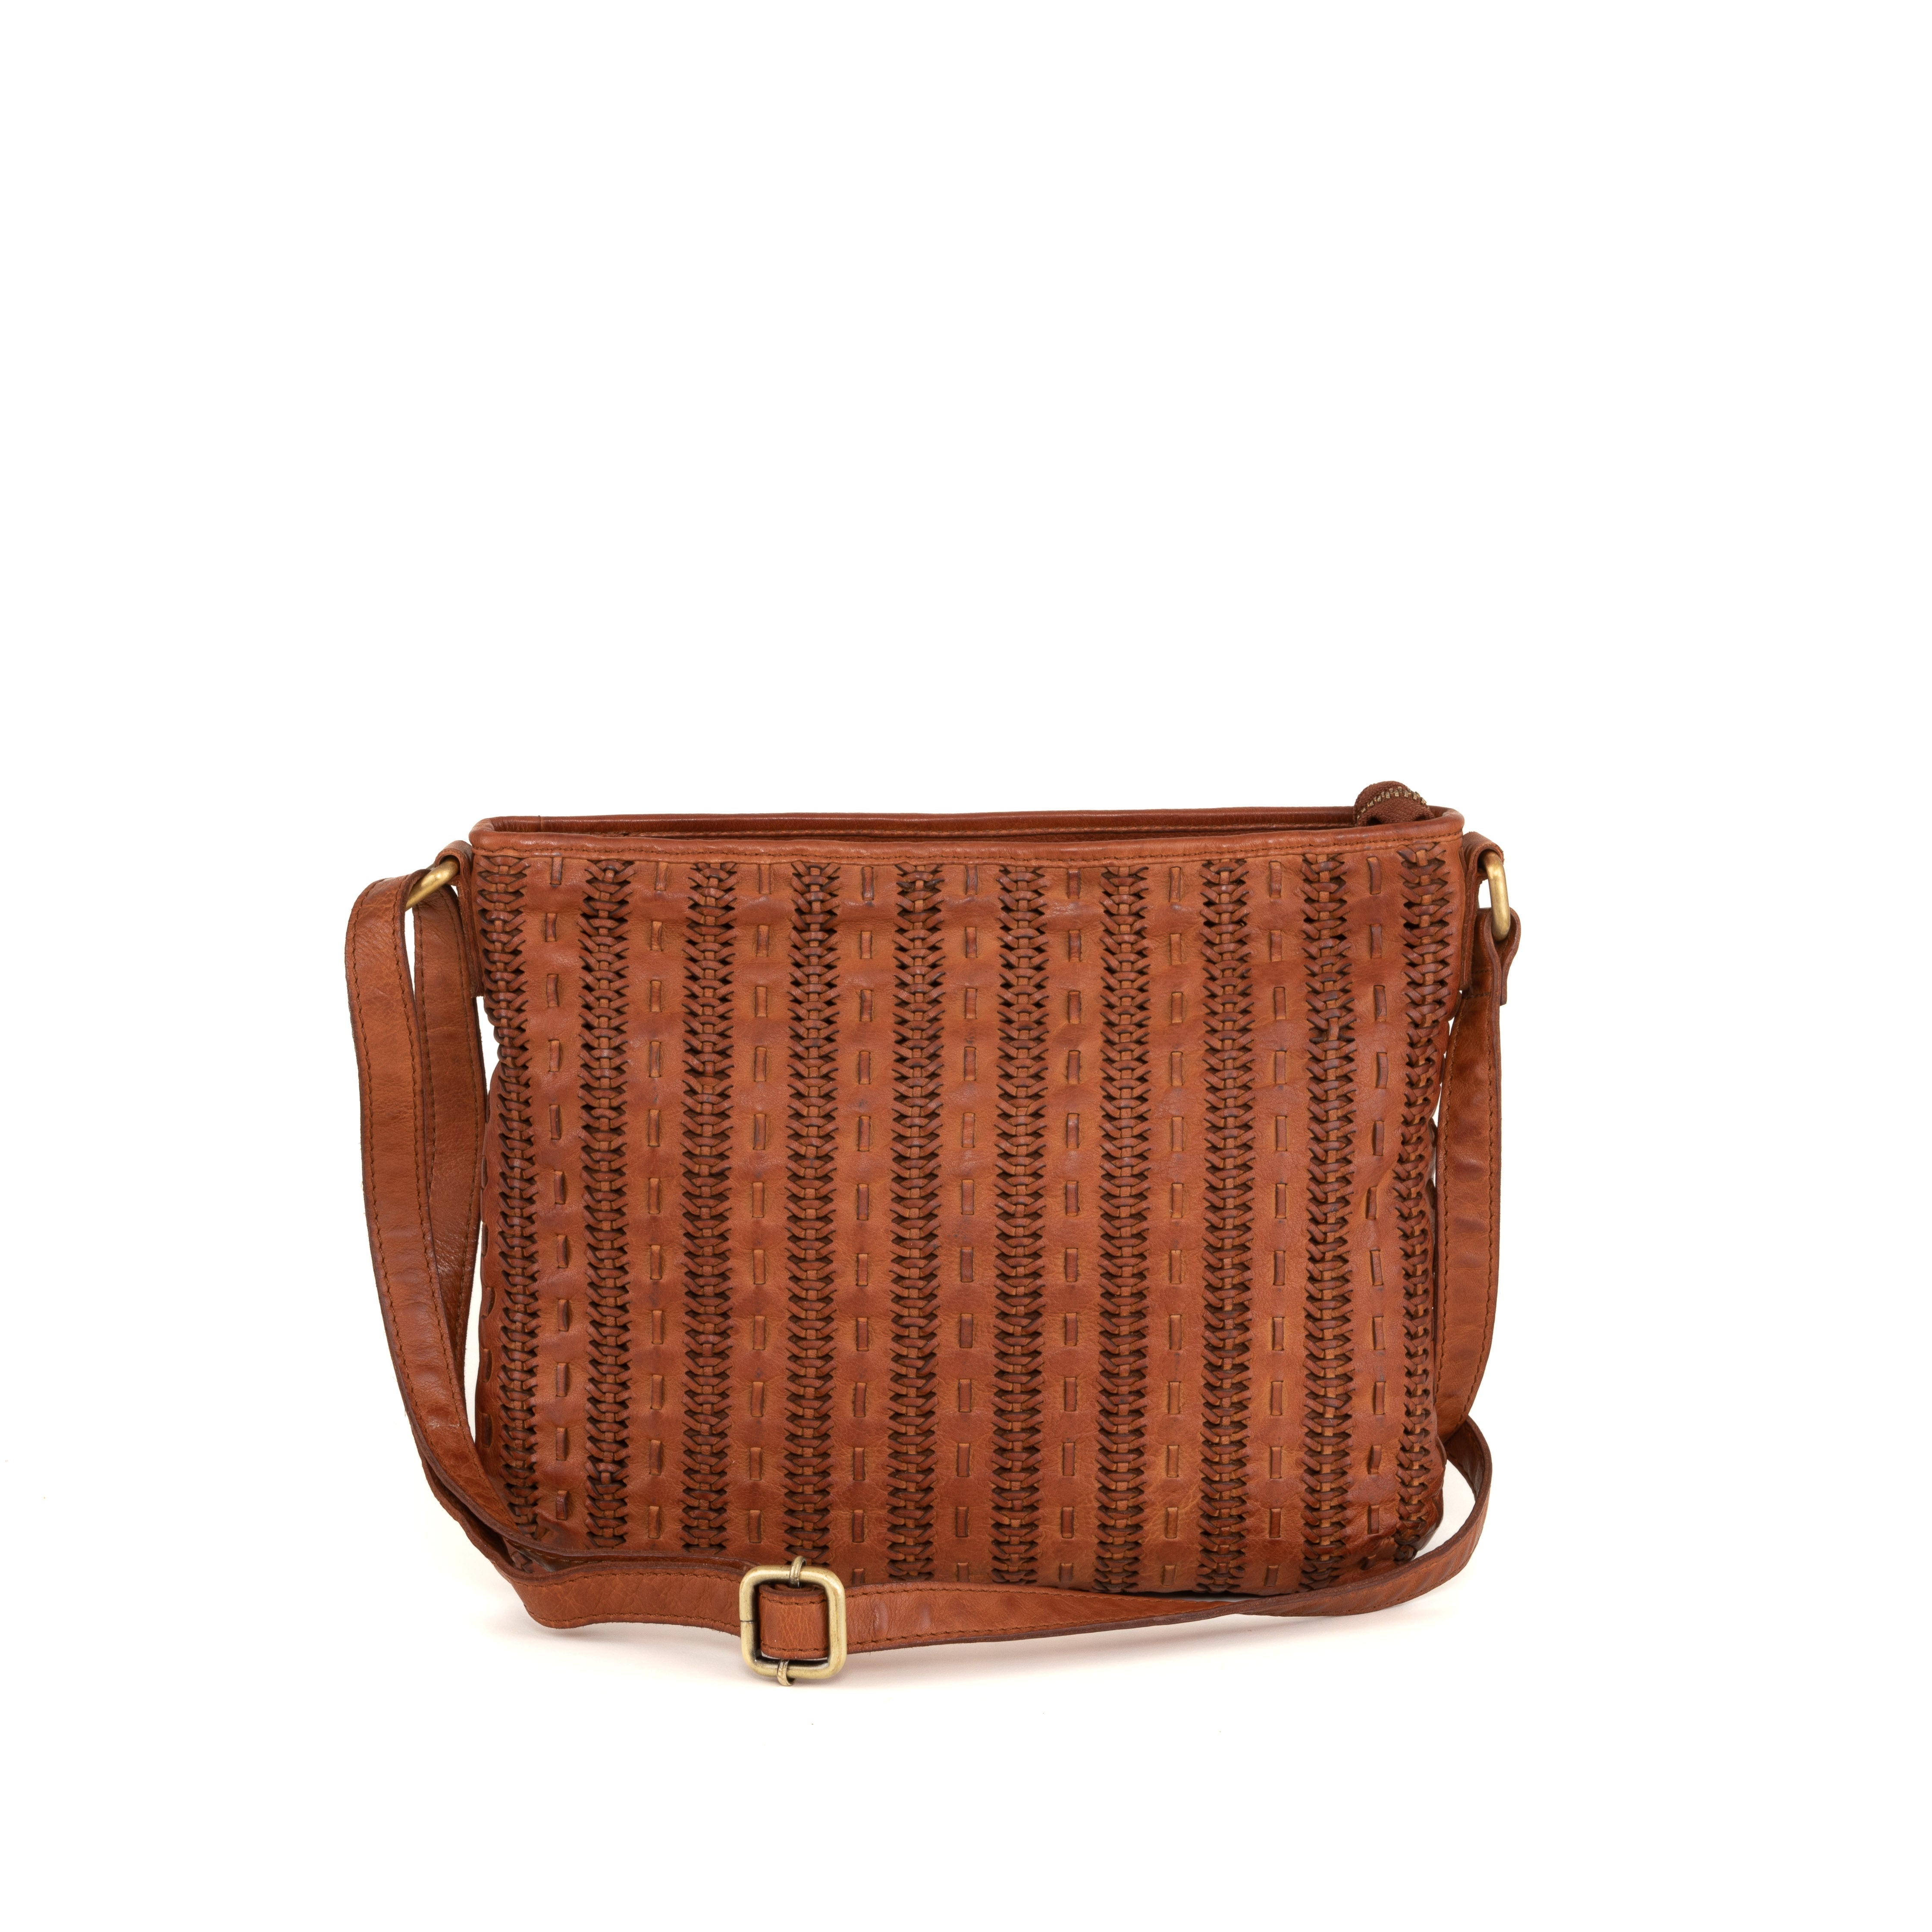 Brown woven leather crossbody handbag with adjustable strap